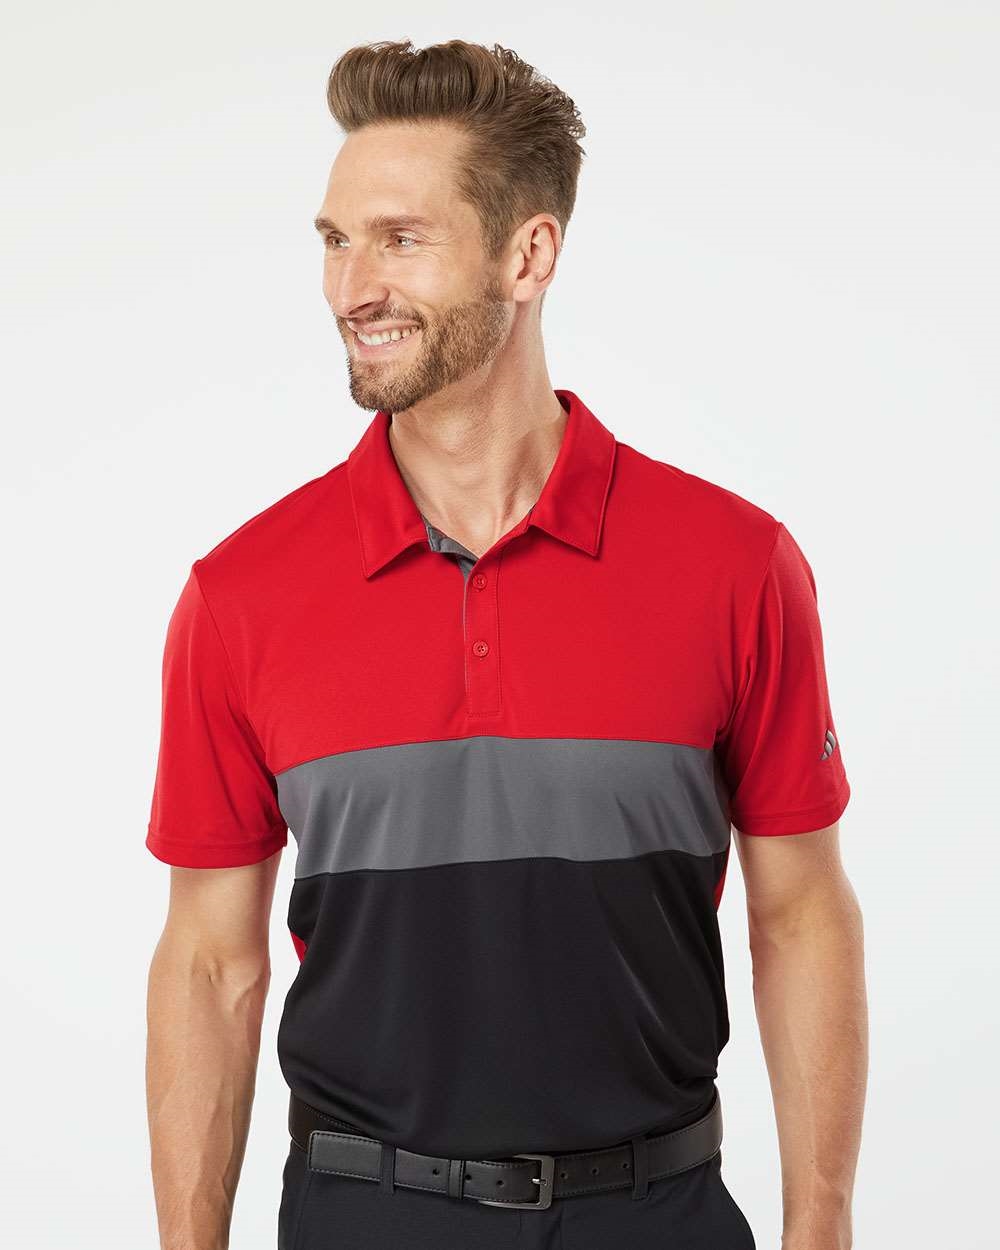 Adidas Golf A236 Merch Sport Polo Shirts